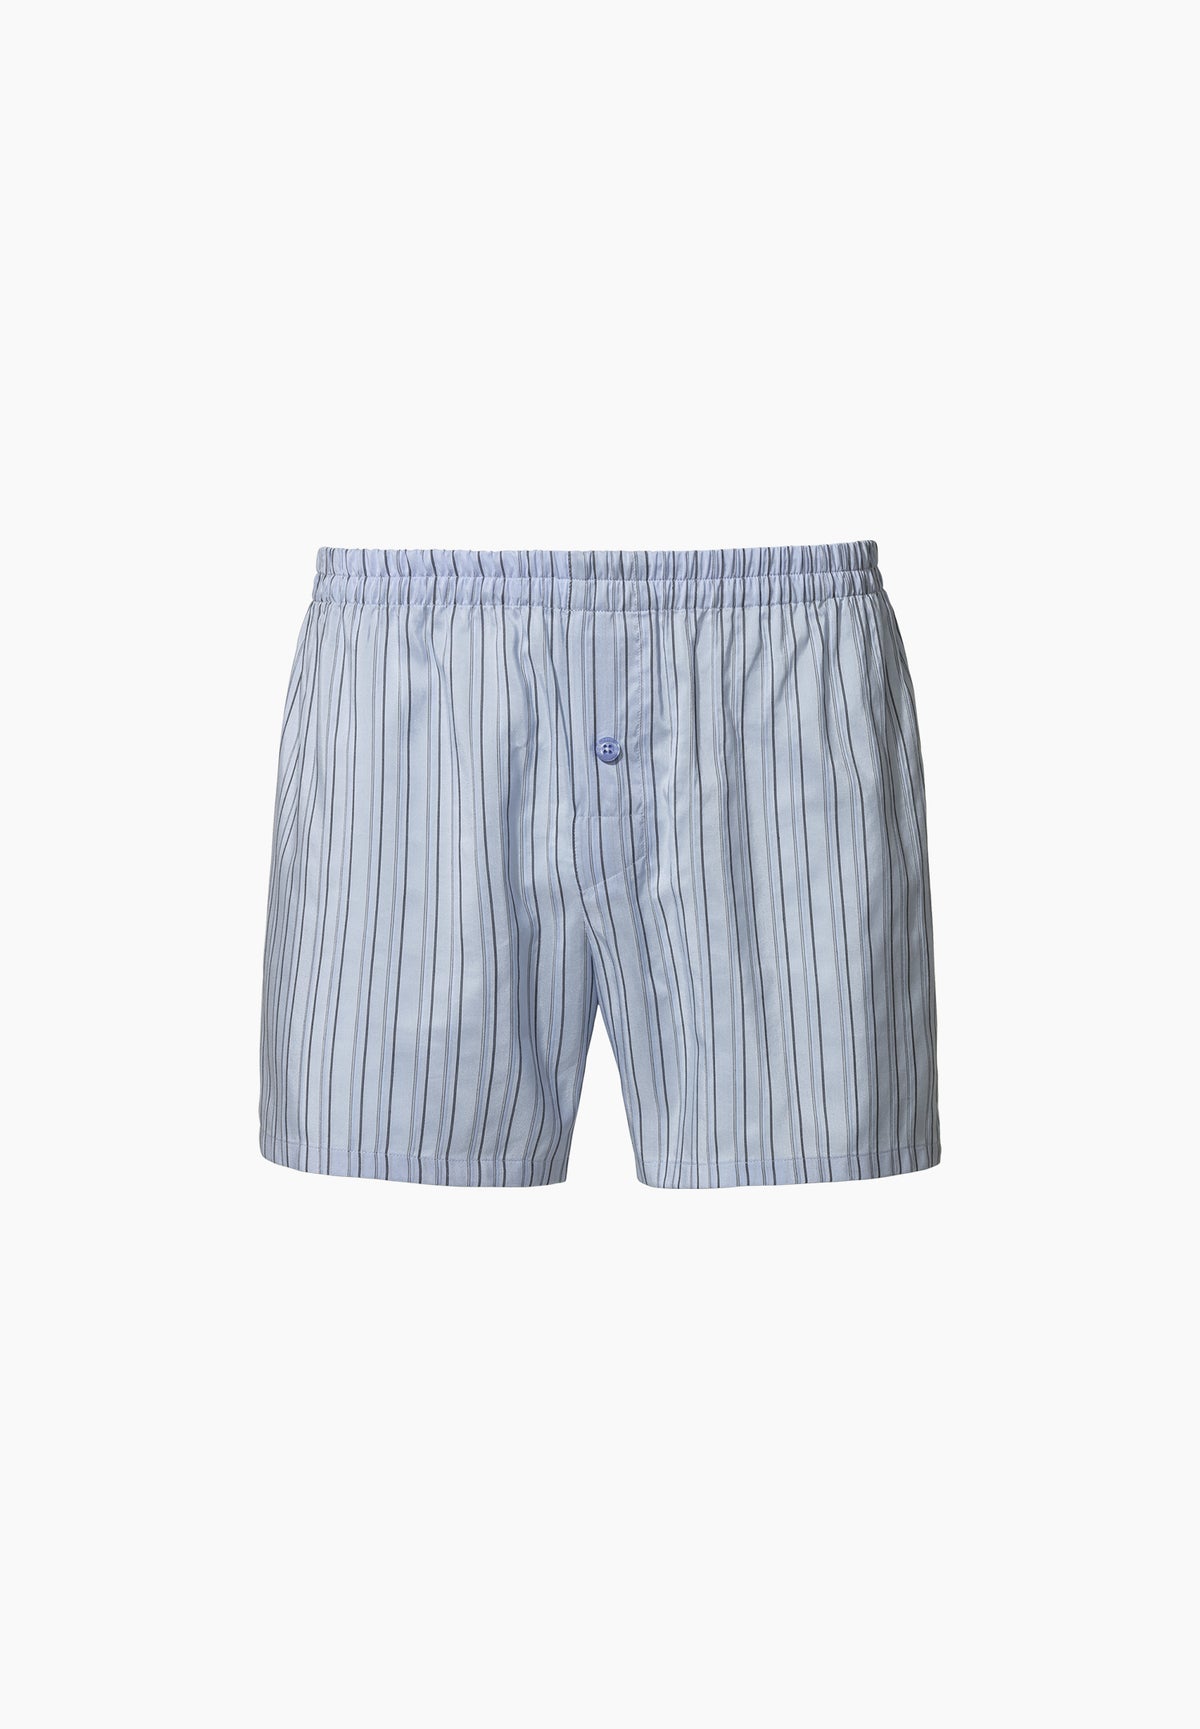 Cotton/Silk Stripes | Boxer Shorts - light blue stripes